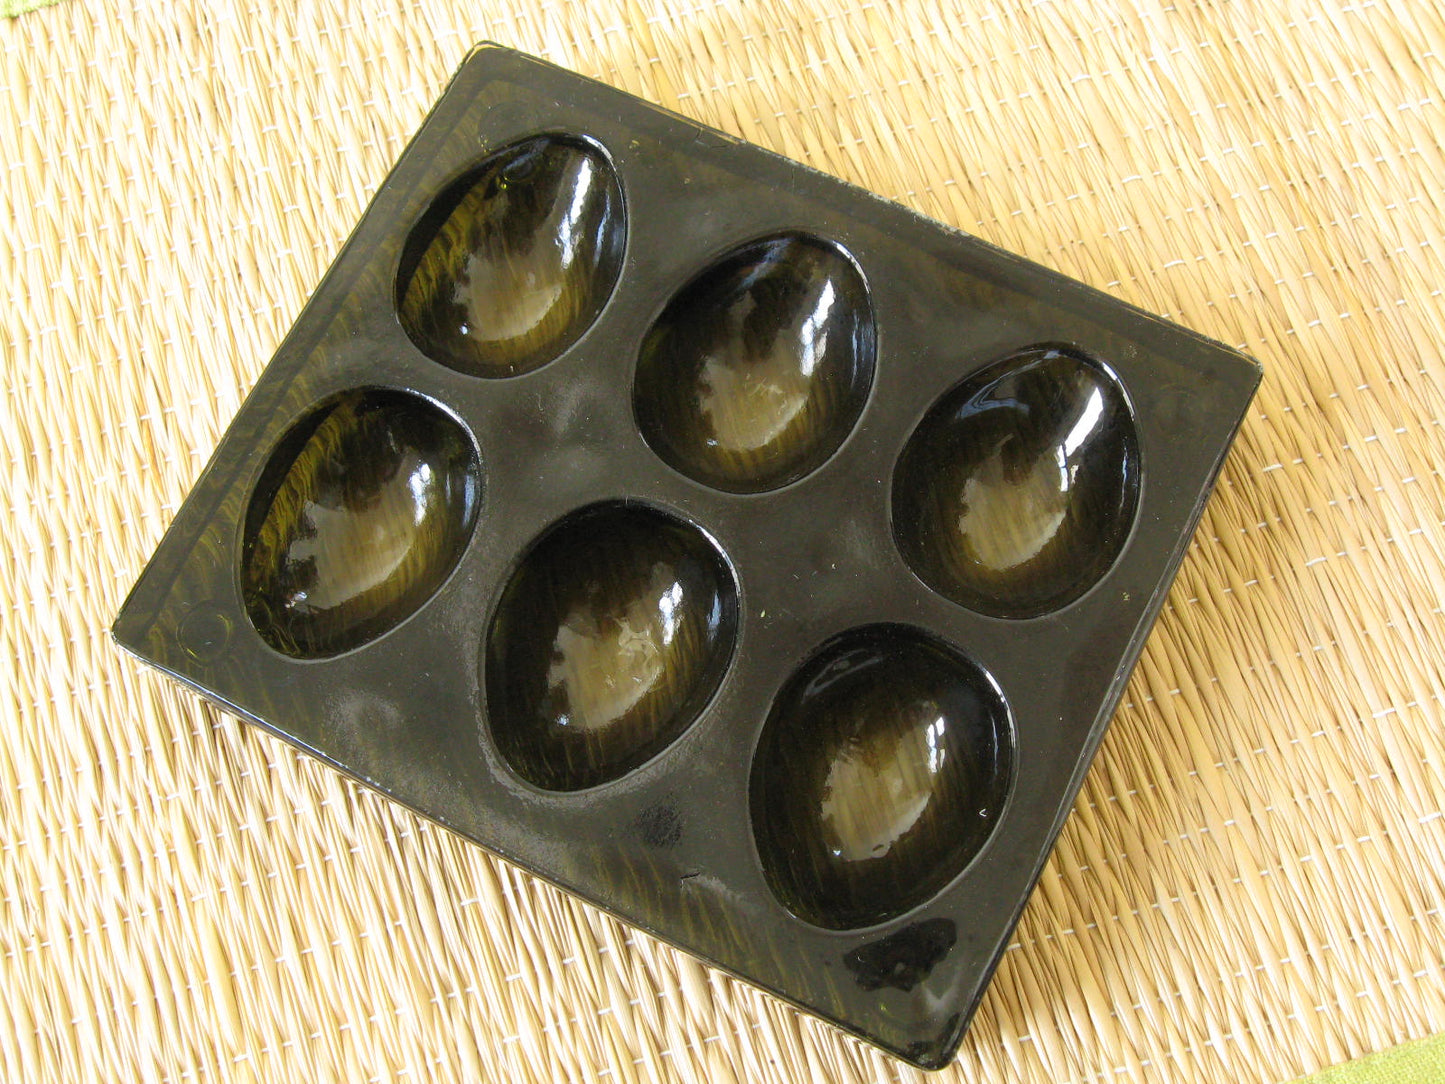 Zojila.com : Petra Egg tray : Translucent black glass serving Tray, 6-egg serving platter: Kitchen Utensil